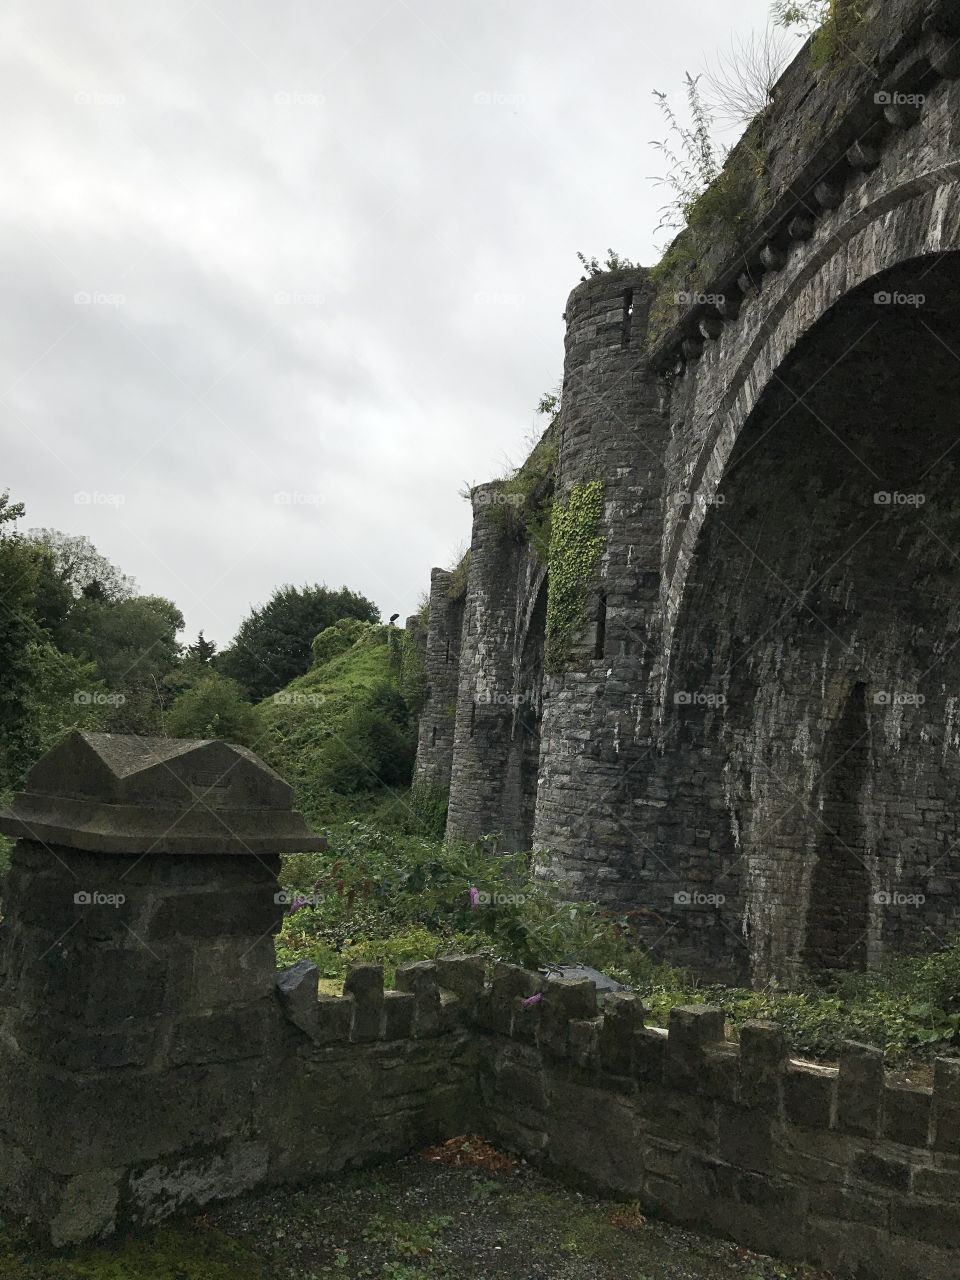 Bridge in Ireland 